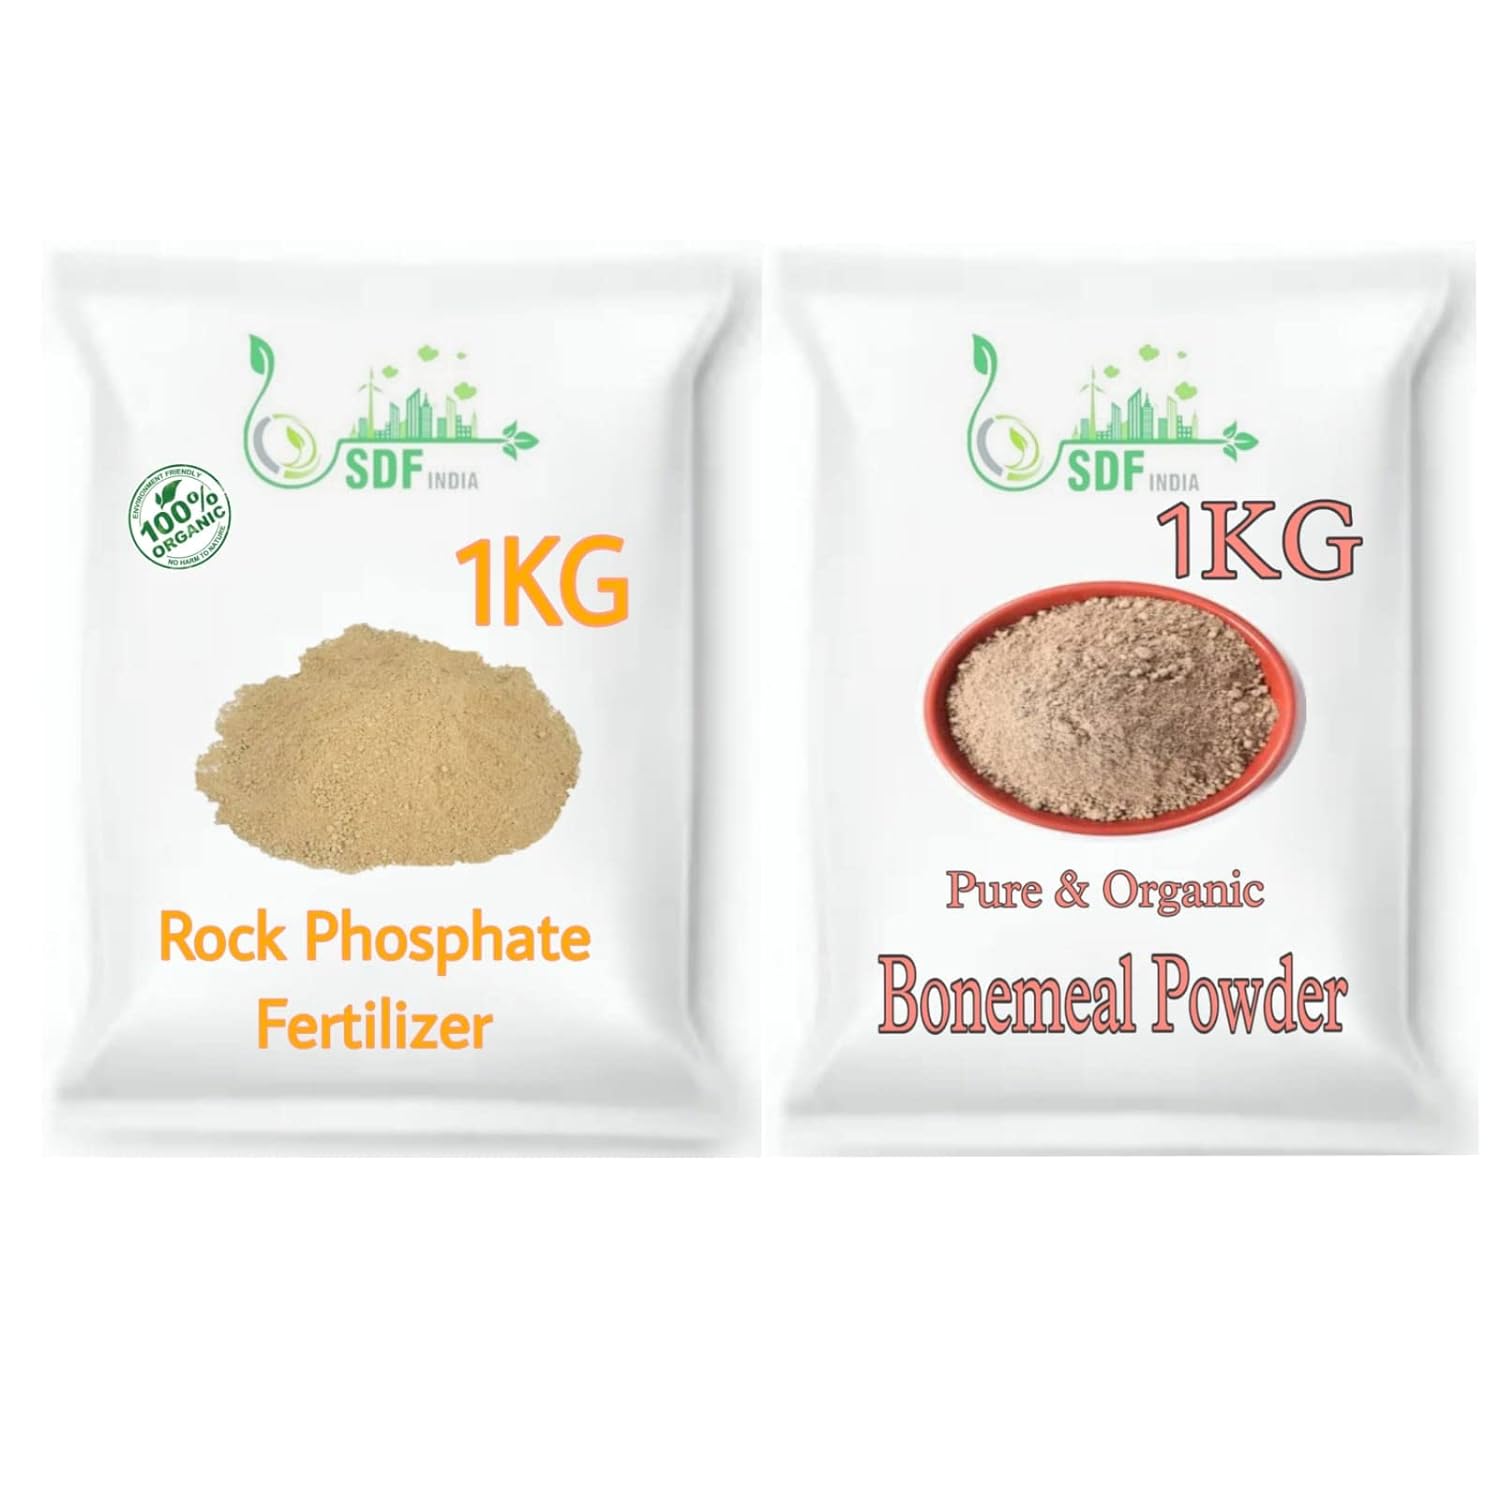 Combo Offer 2 in1 Pack (Rock Phasphate / Bonemeal Powder Each 1Kg )